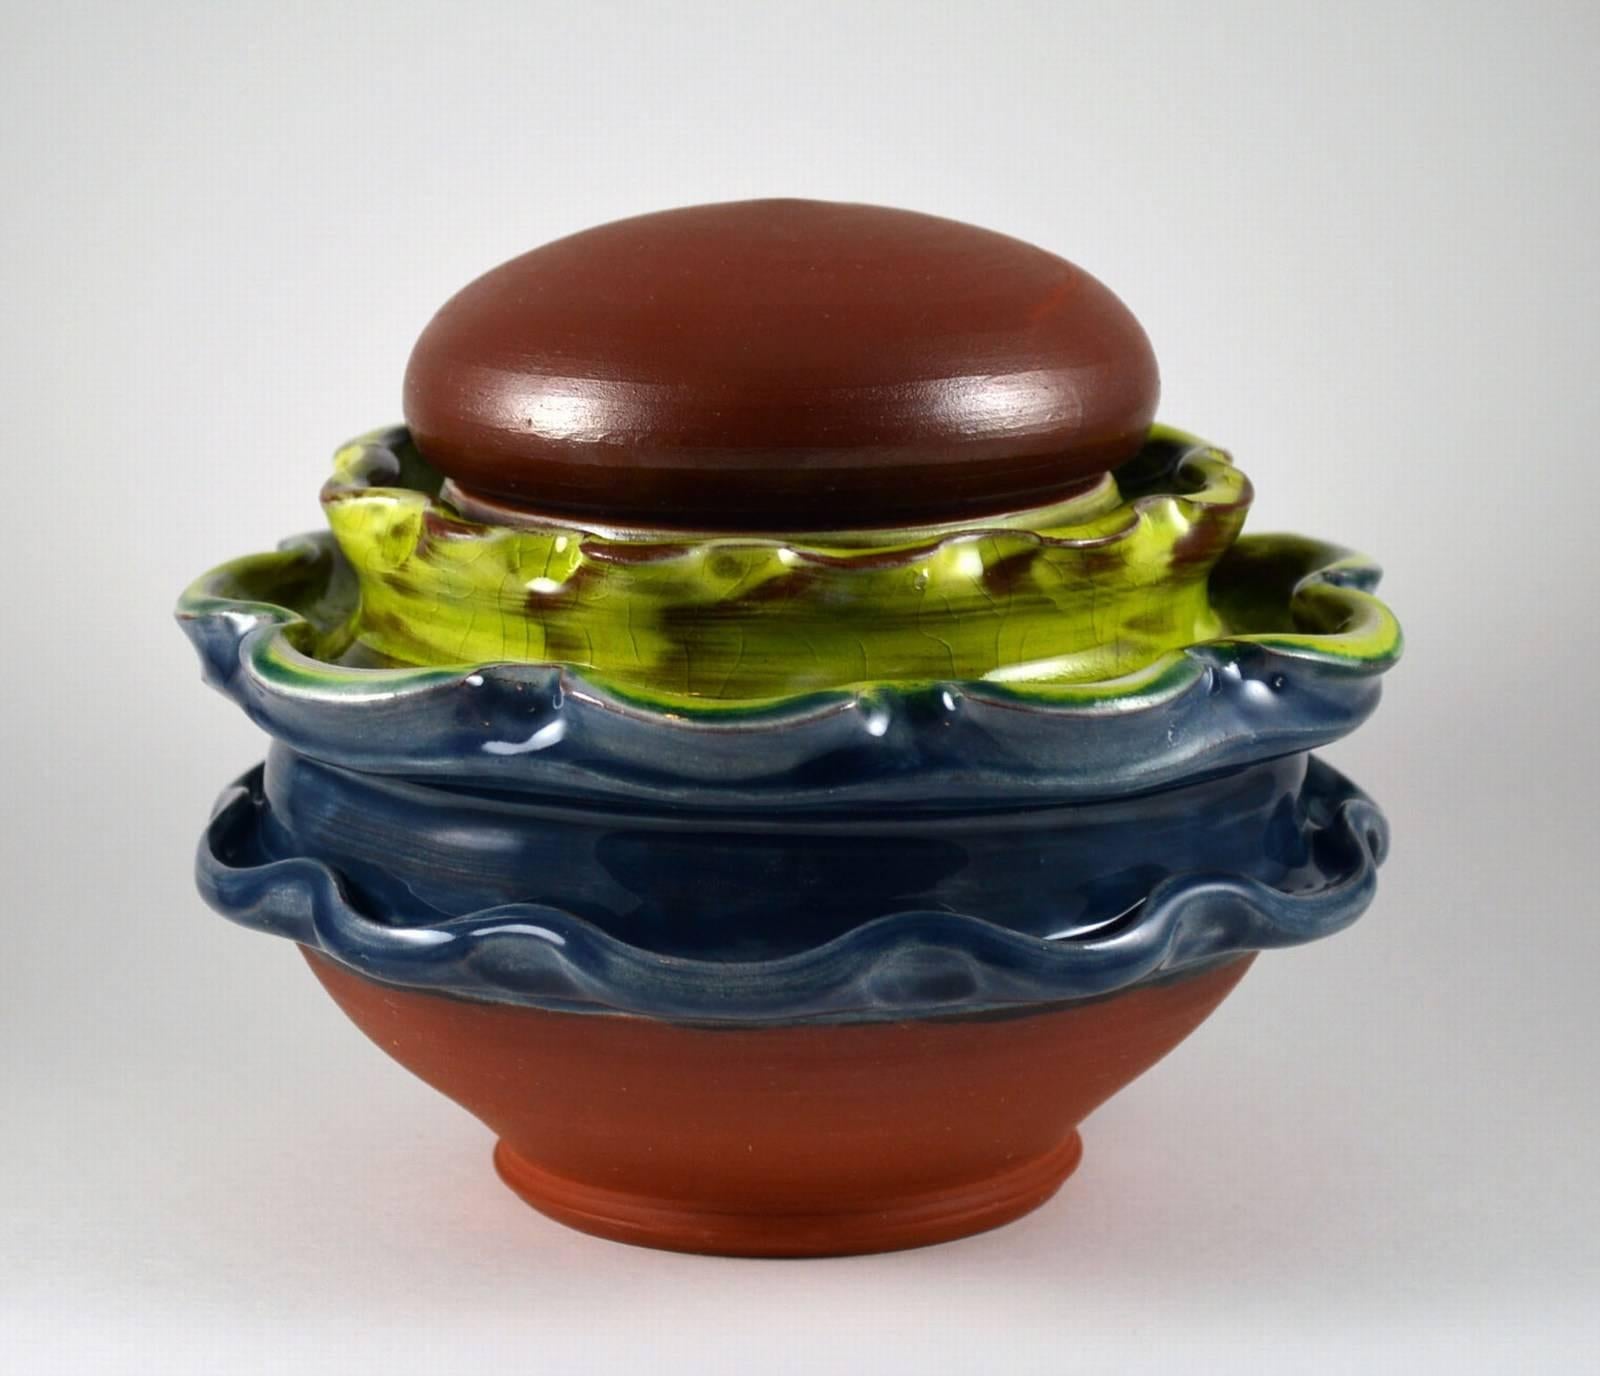 Mariko Brown Harkin Figurative Sculpture - Coffee Jar